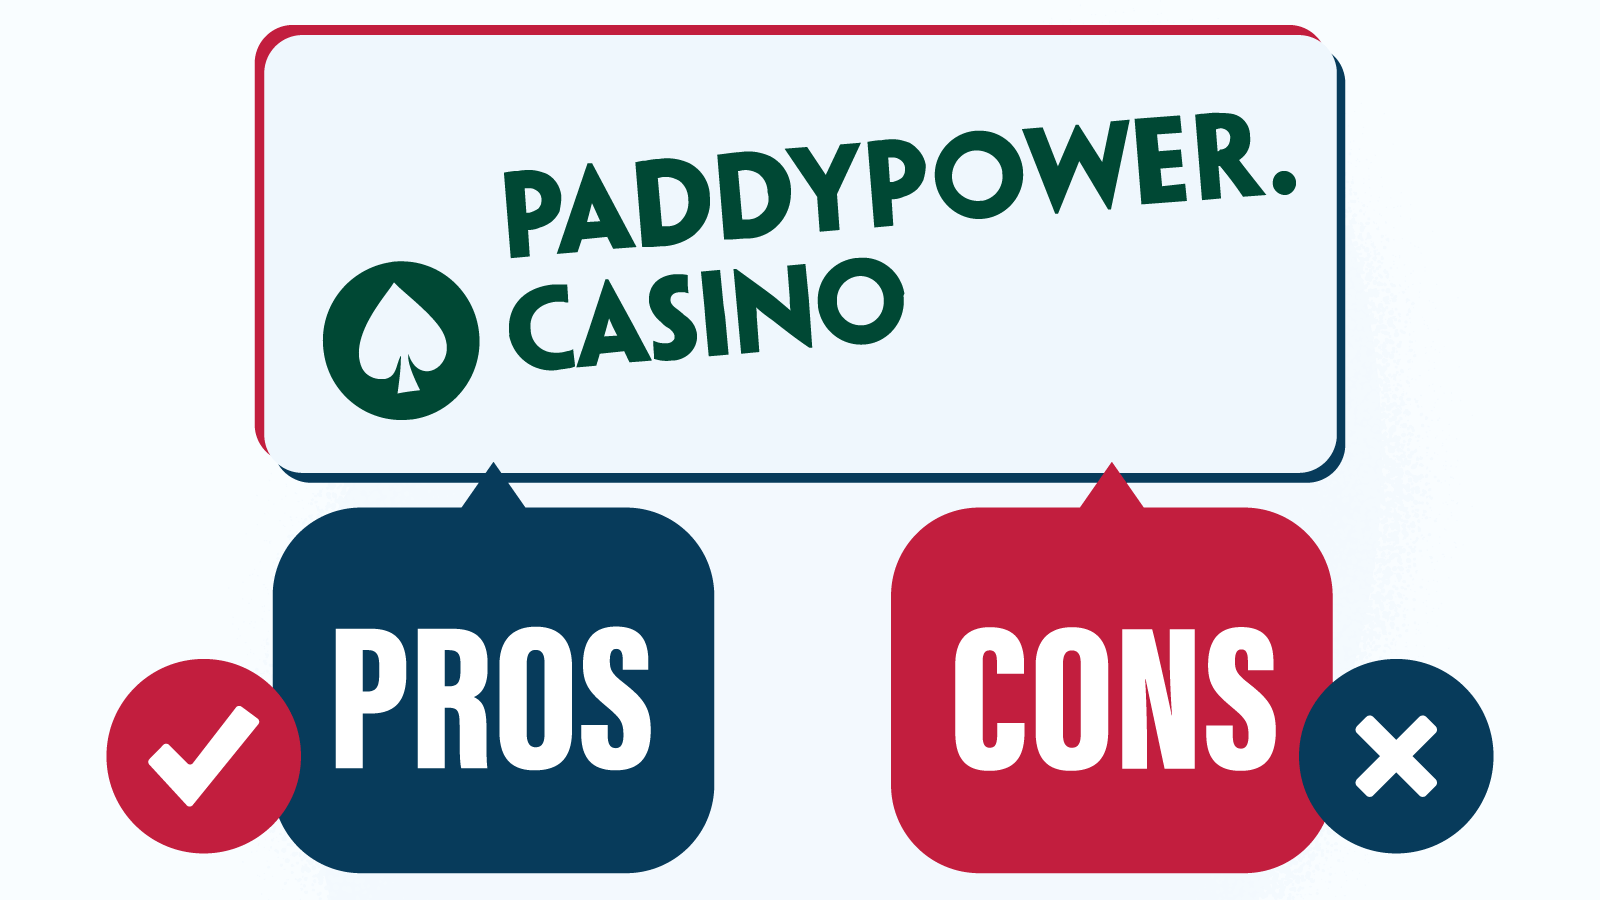 Second Best 5 Minimum Deposit Casino UK – Paddy Power Casino